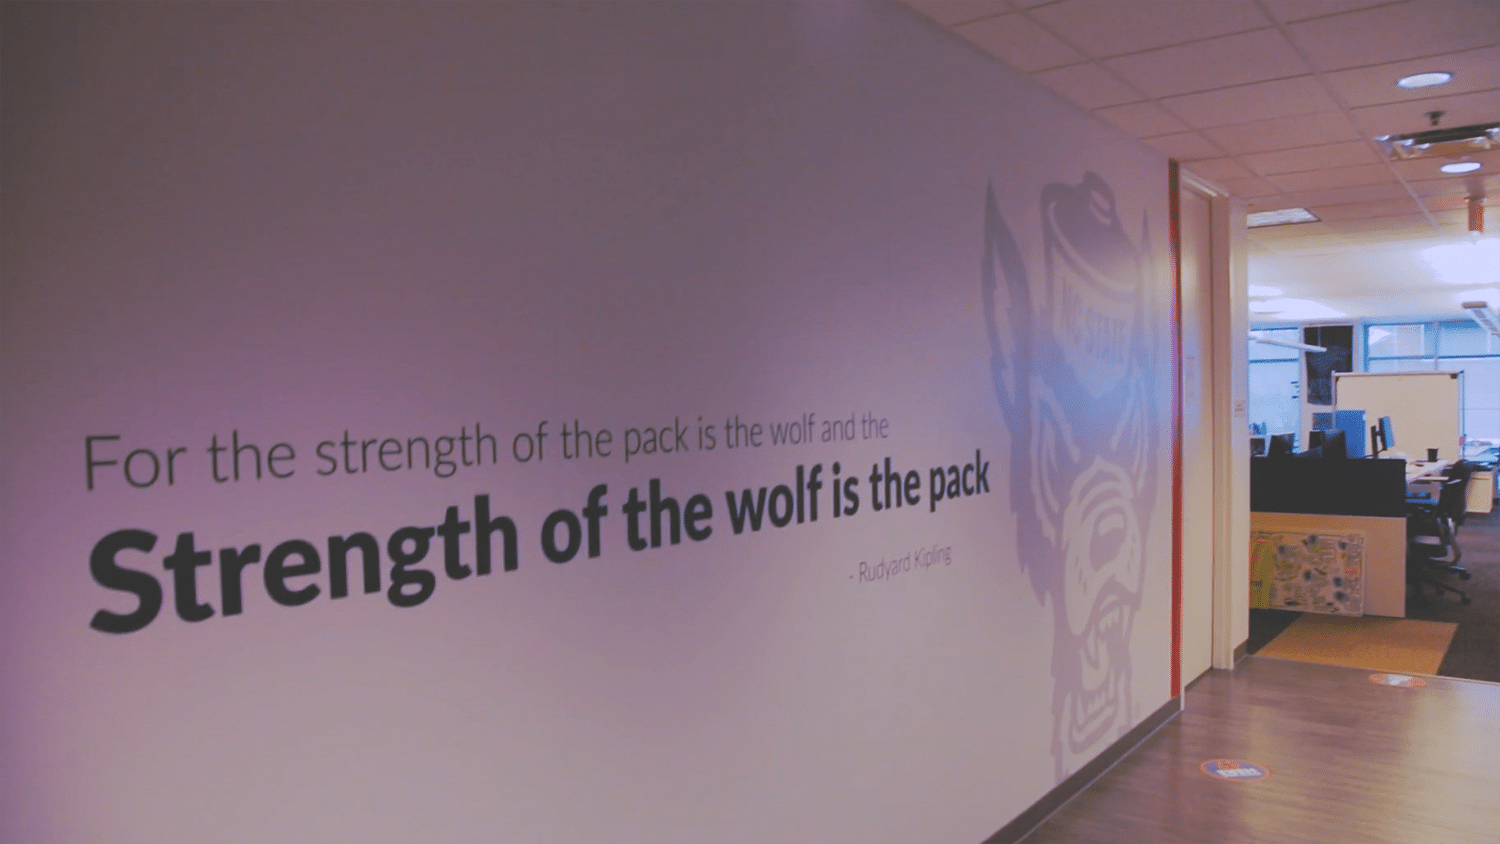 LexisNexis办公室走廊上的一幅壁画，上面写着“因为狼群的力量就是狼，狼的力量就是狼群”